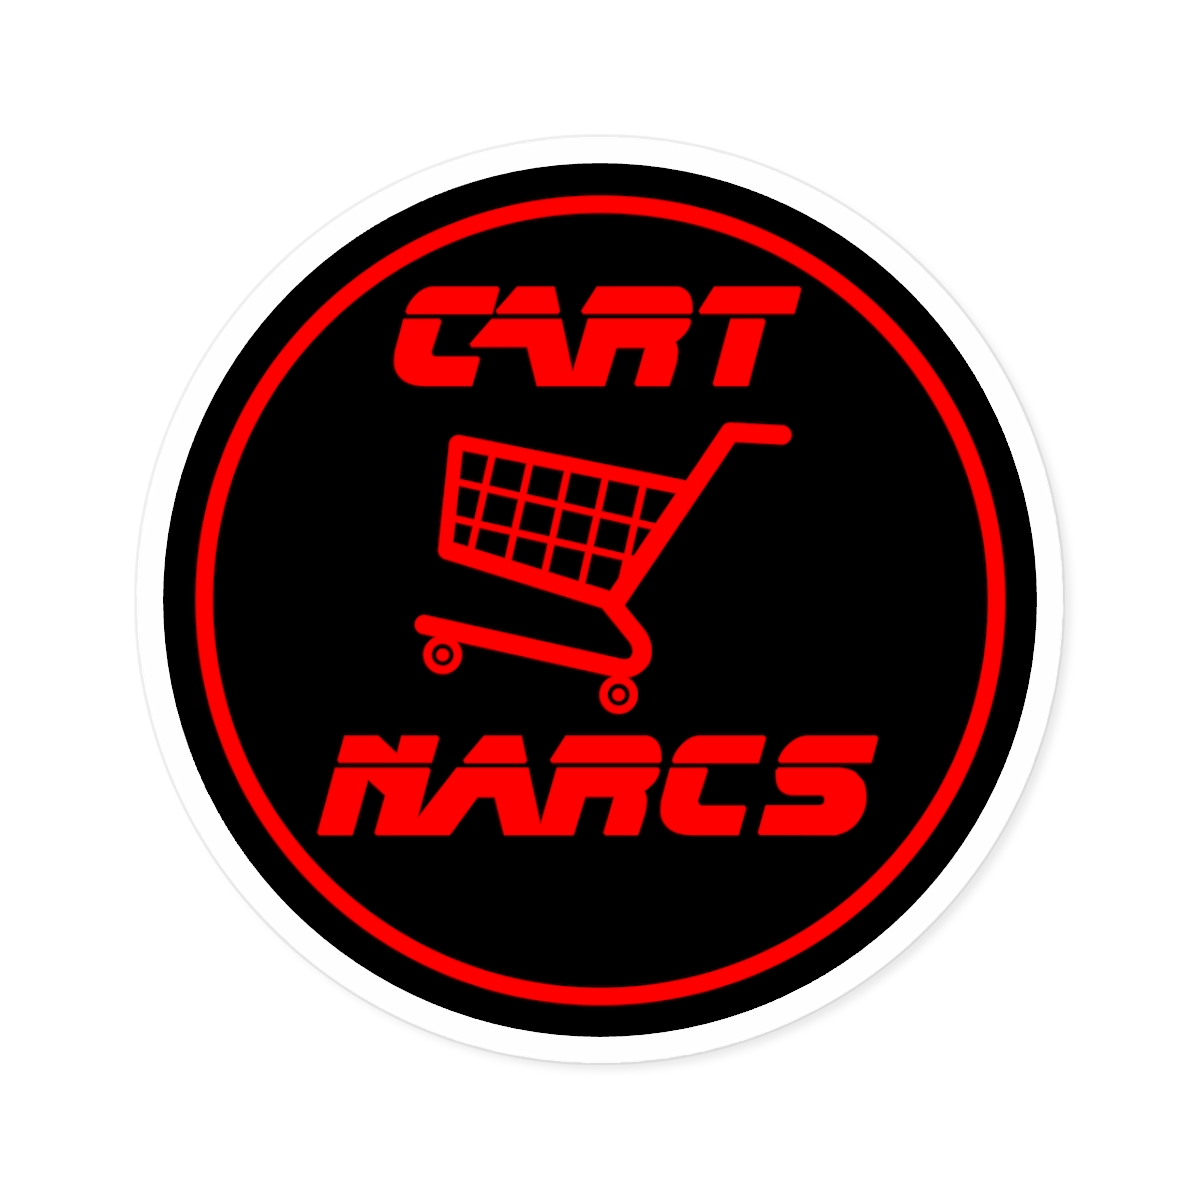 Cart Narcs 3" Round Sticker product thumbnail image